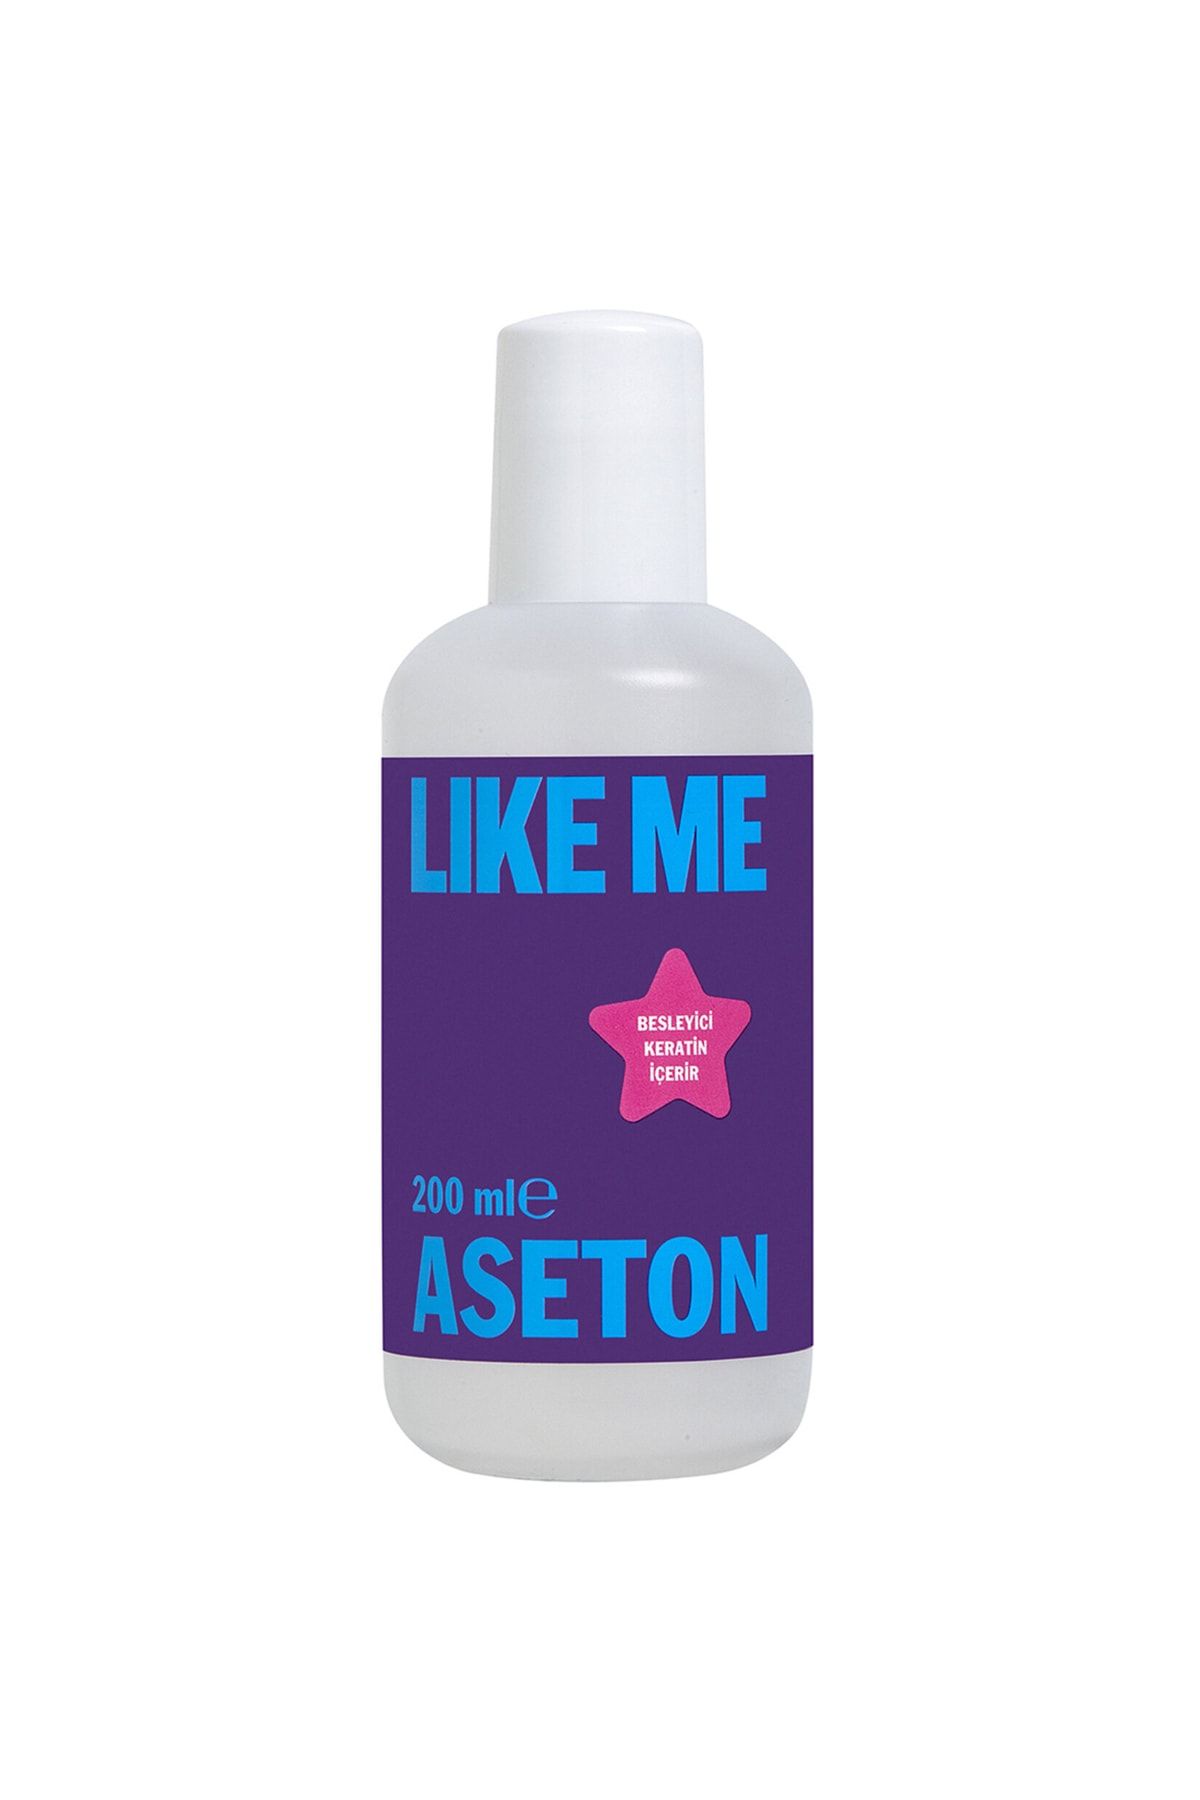 Like me Aseton 200 ml